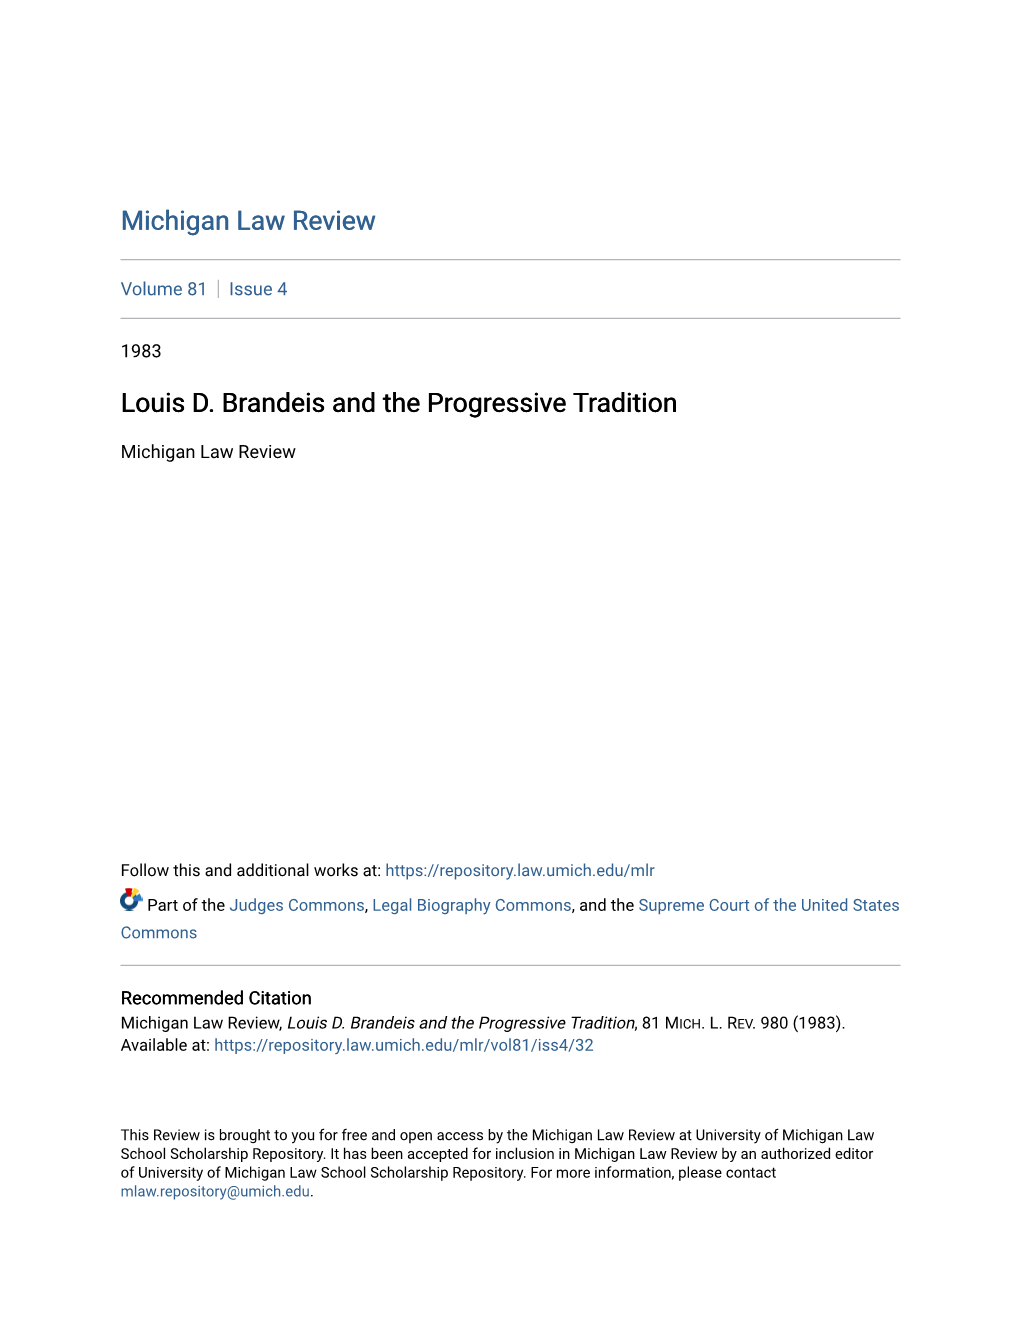 Louis D. Brandeis and the Progressive Tradition